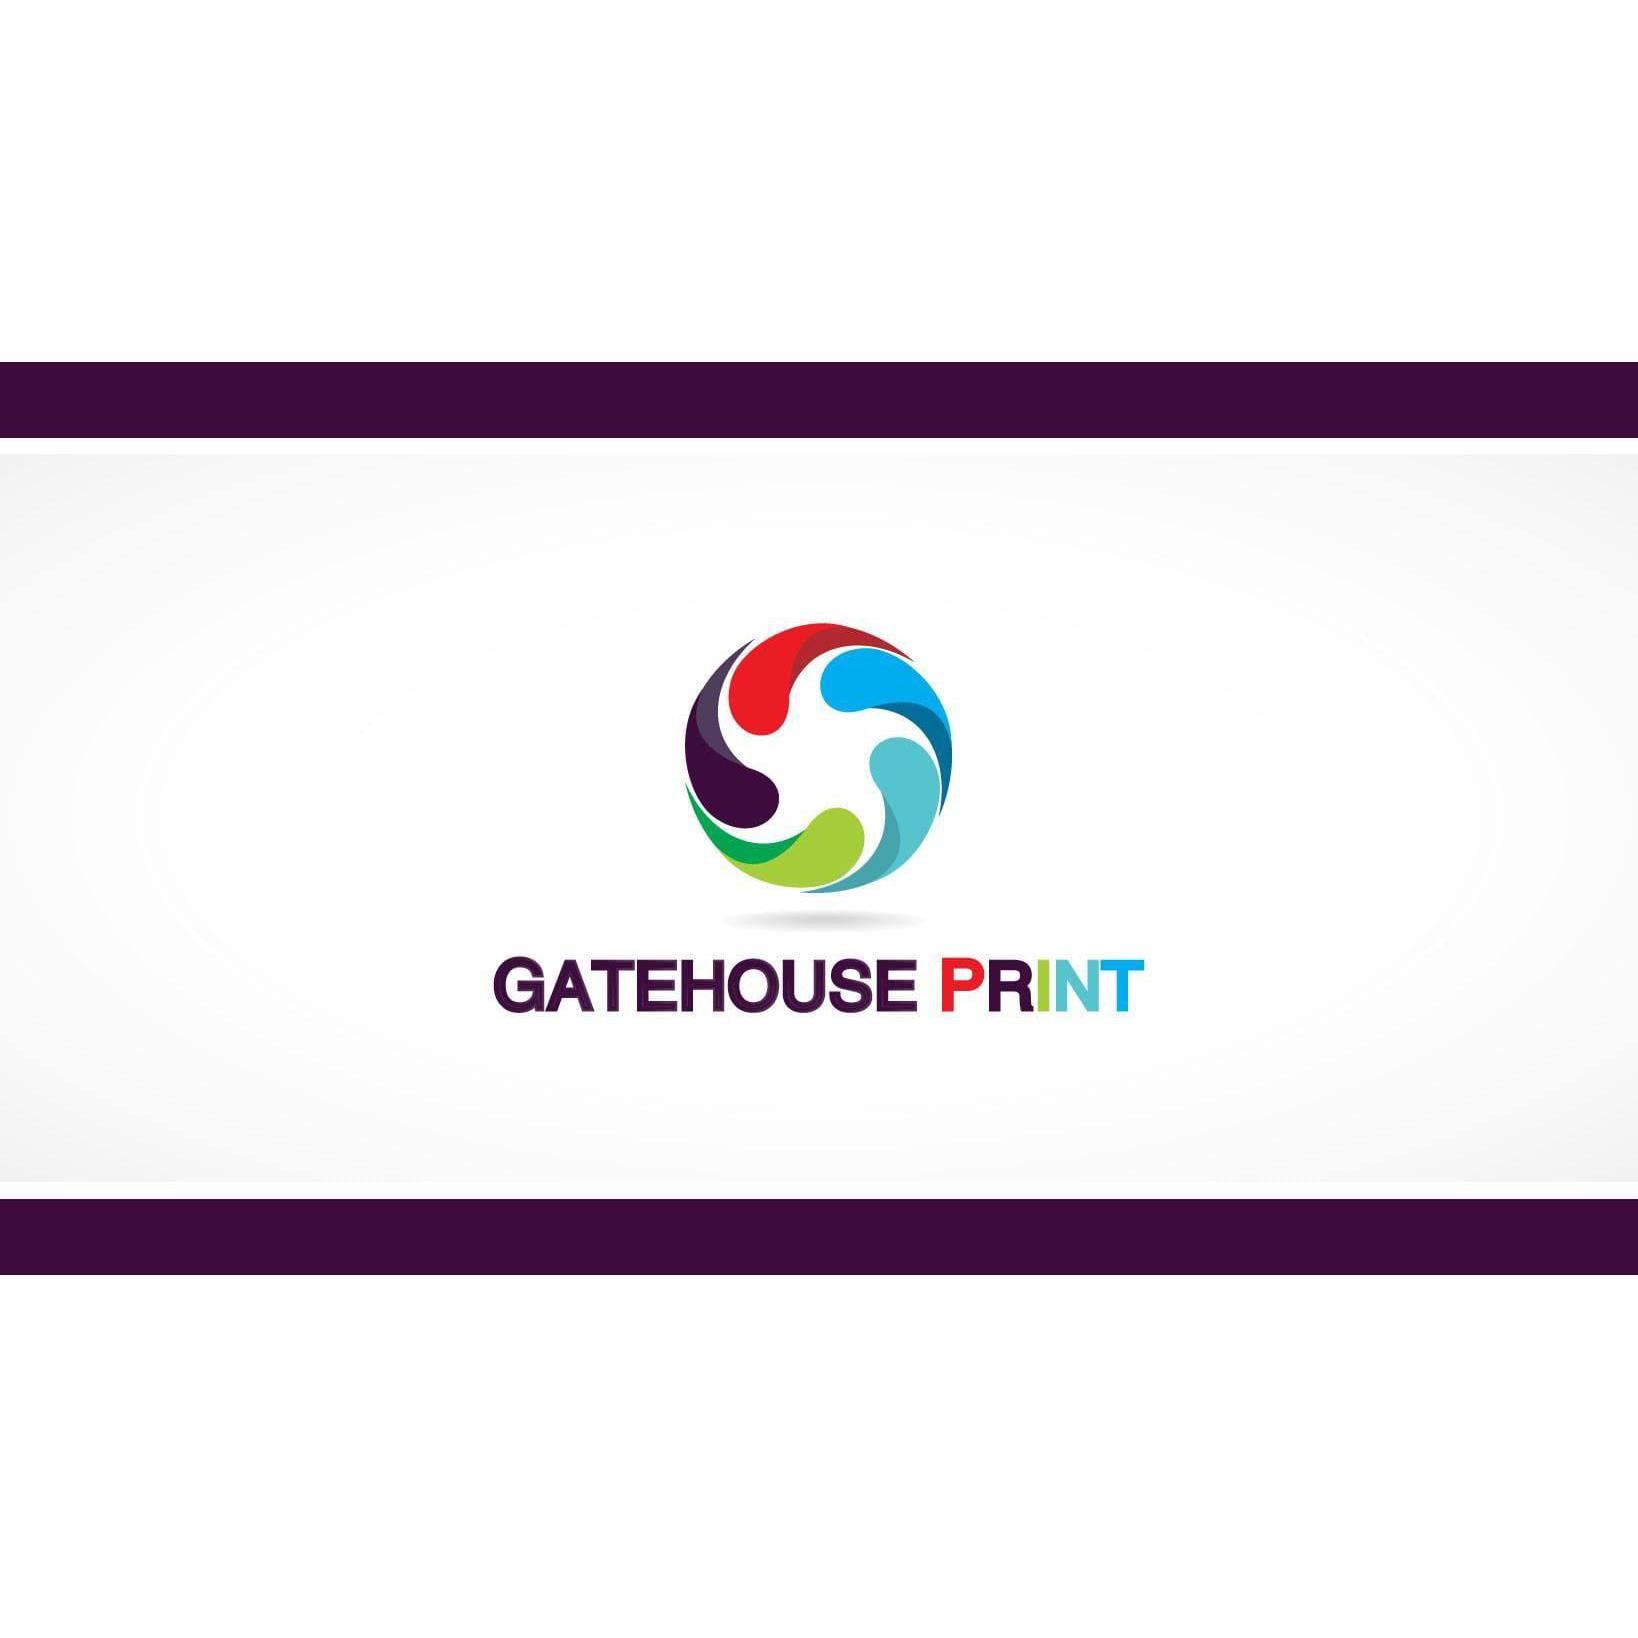 Gatehouse Print - Morecambe, Lancashire LA4 5HB - 01524 410951 | ShowMeLocal.com